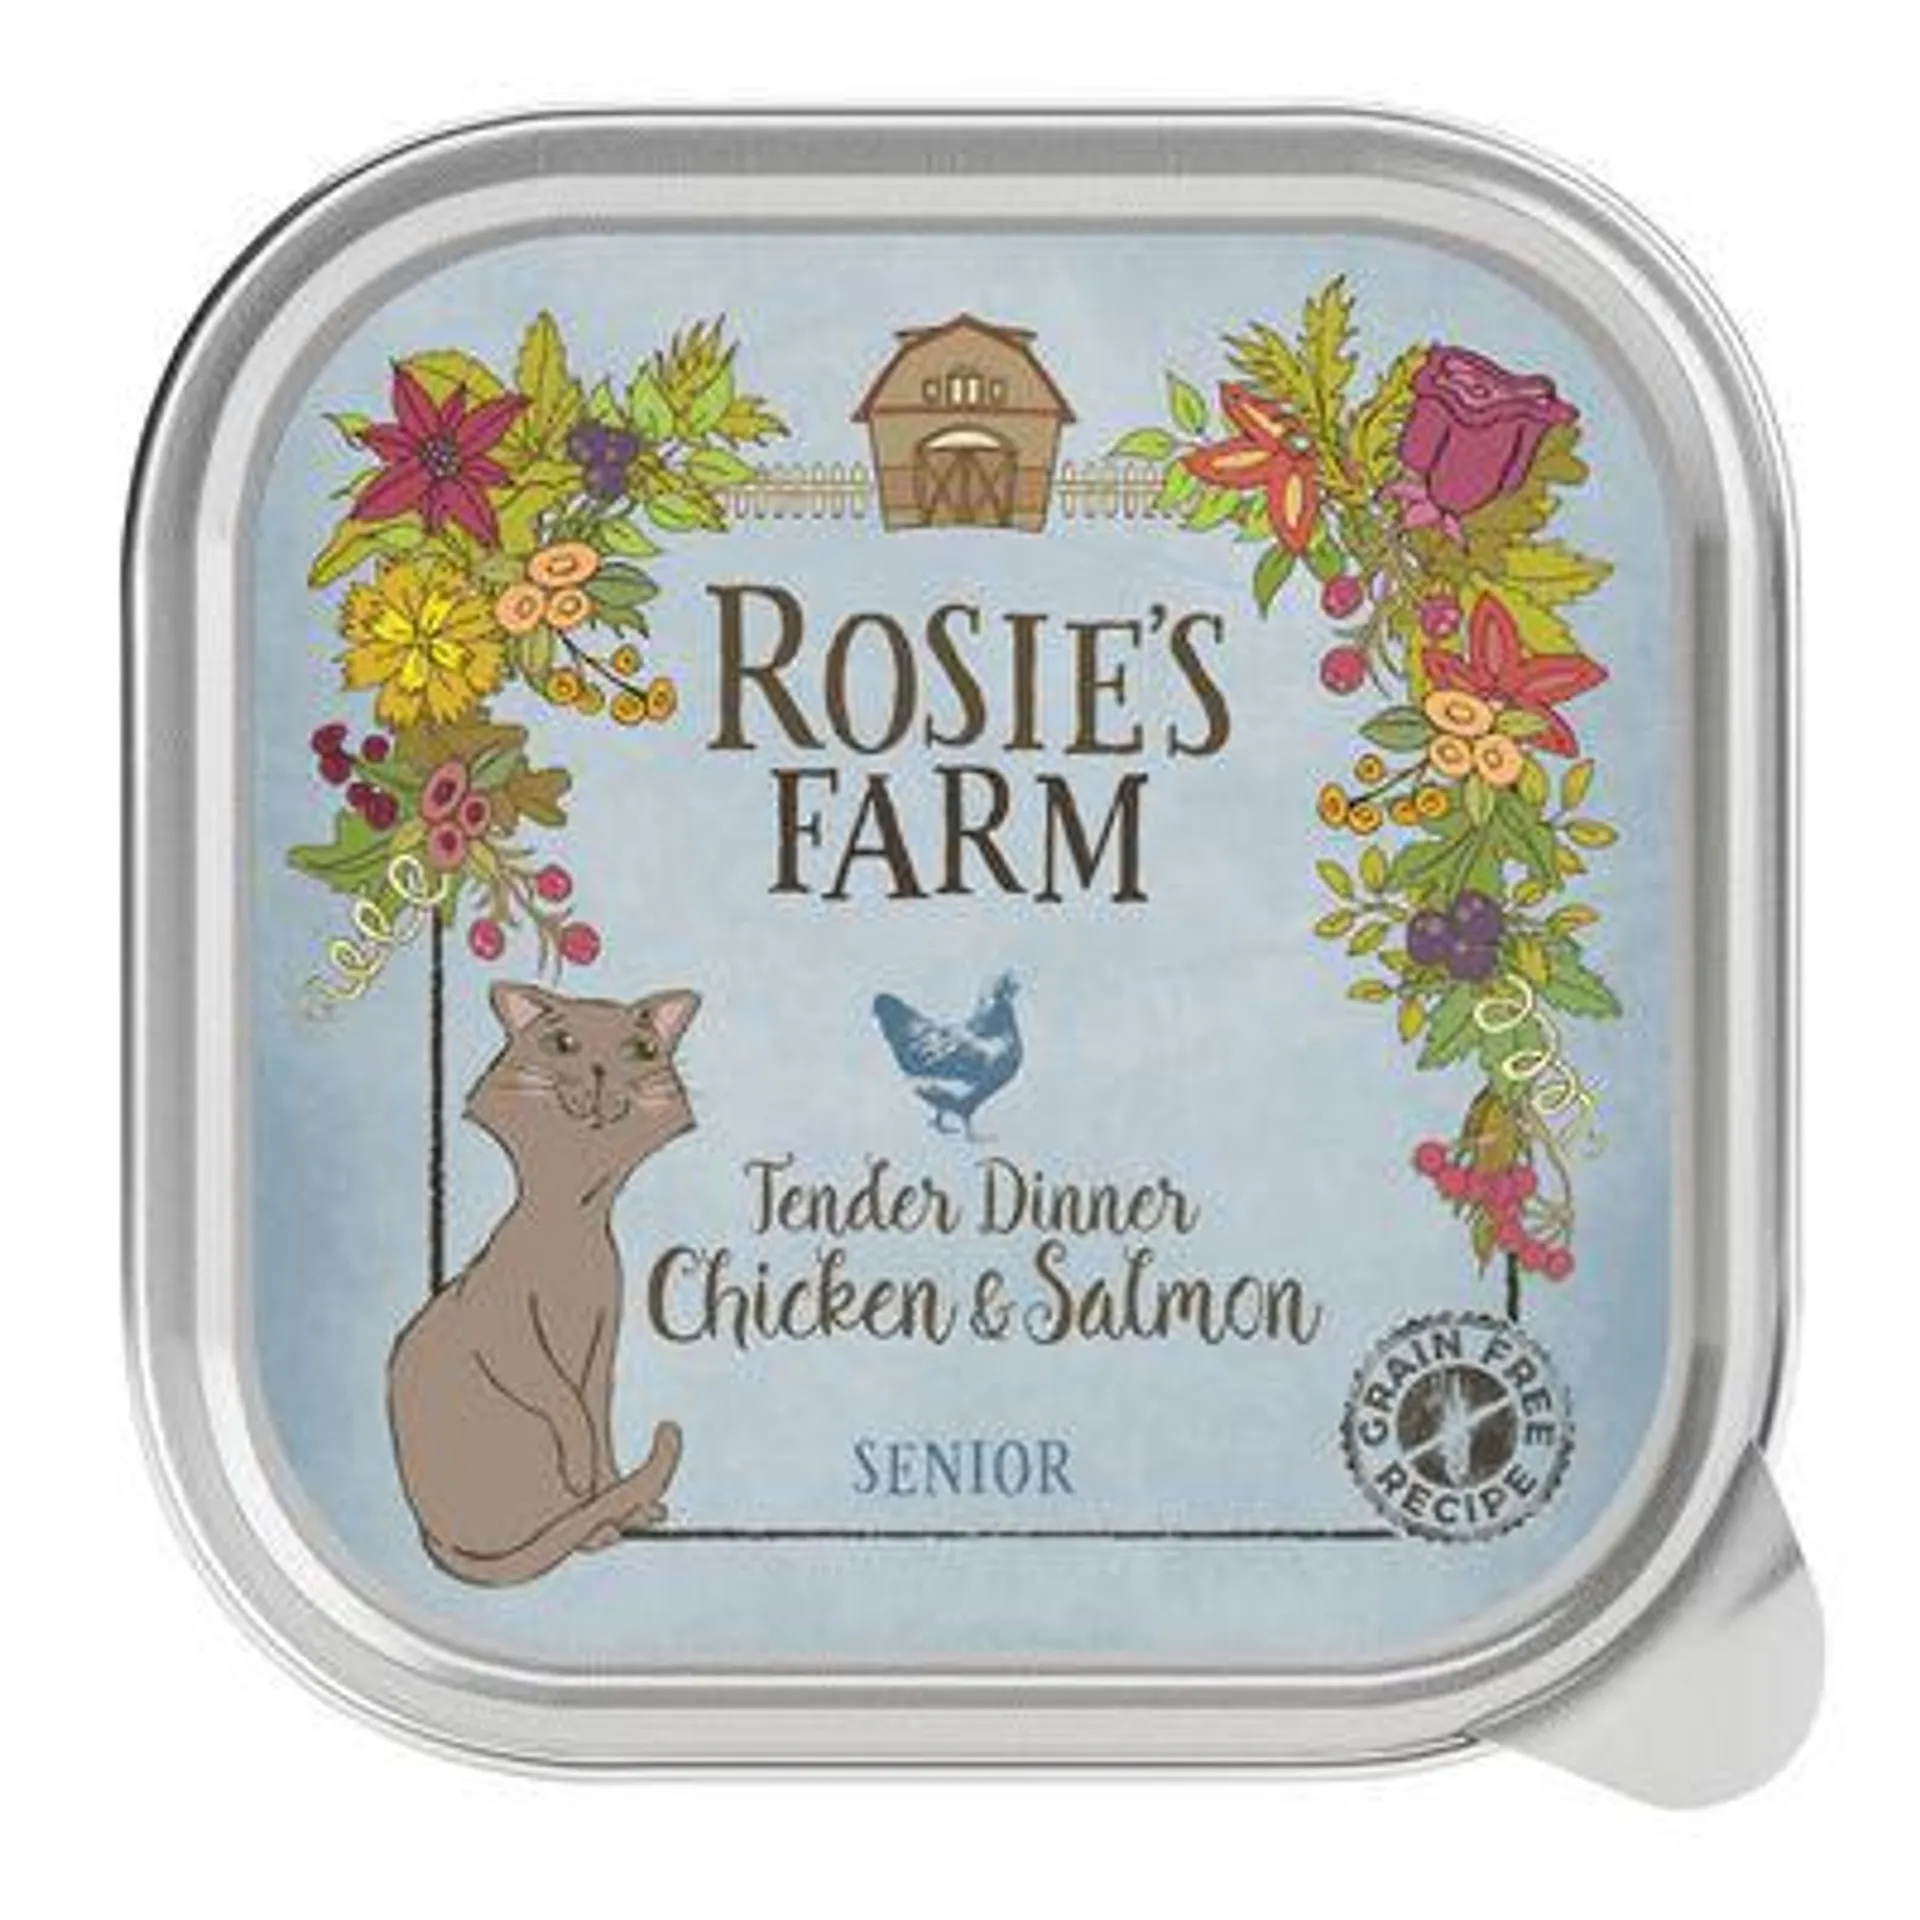 16 x 100g Rosie's Farm Wet Cat Food - Special Price! *